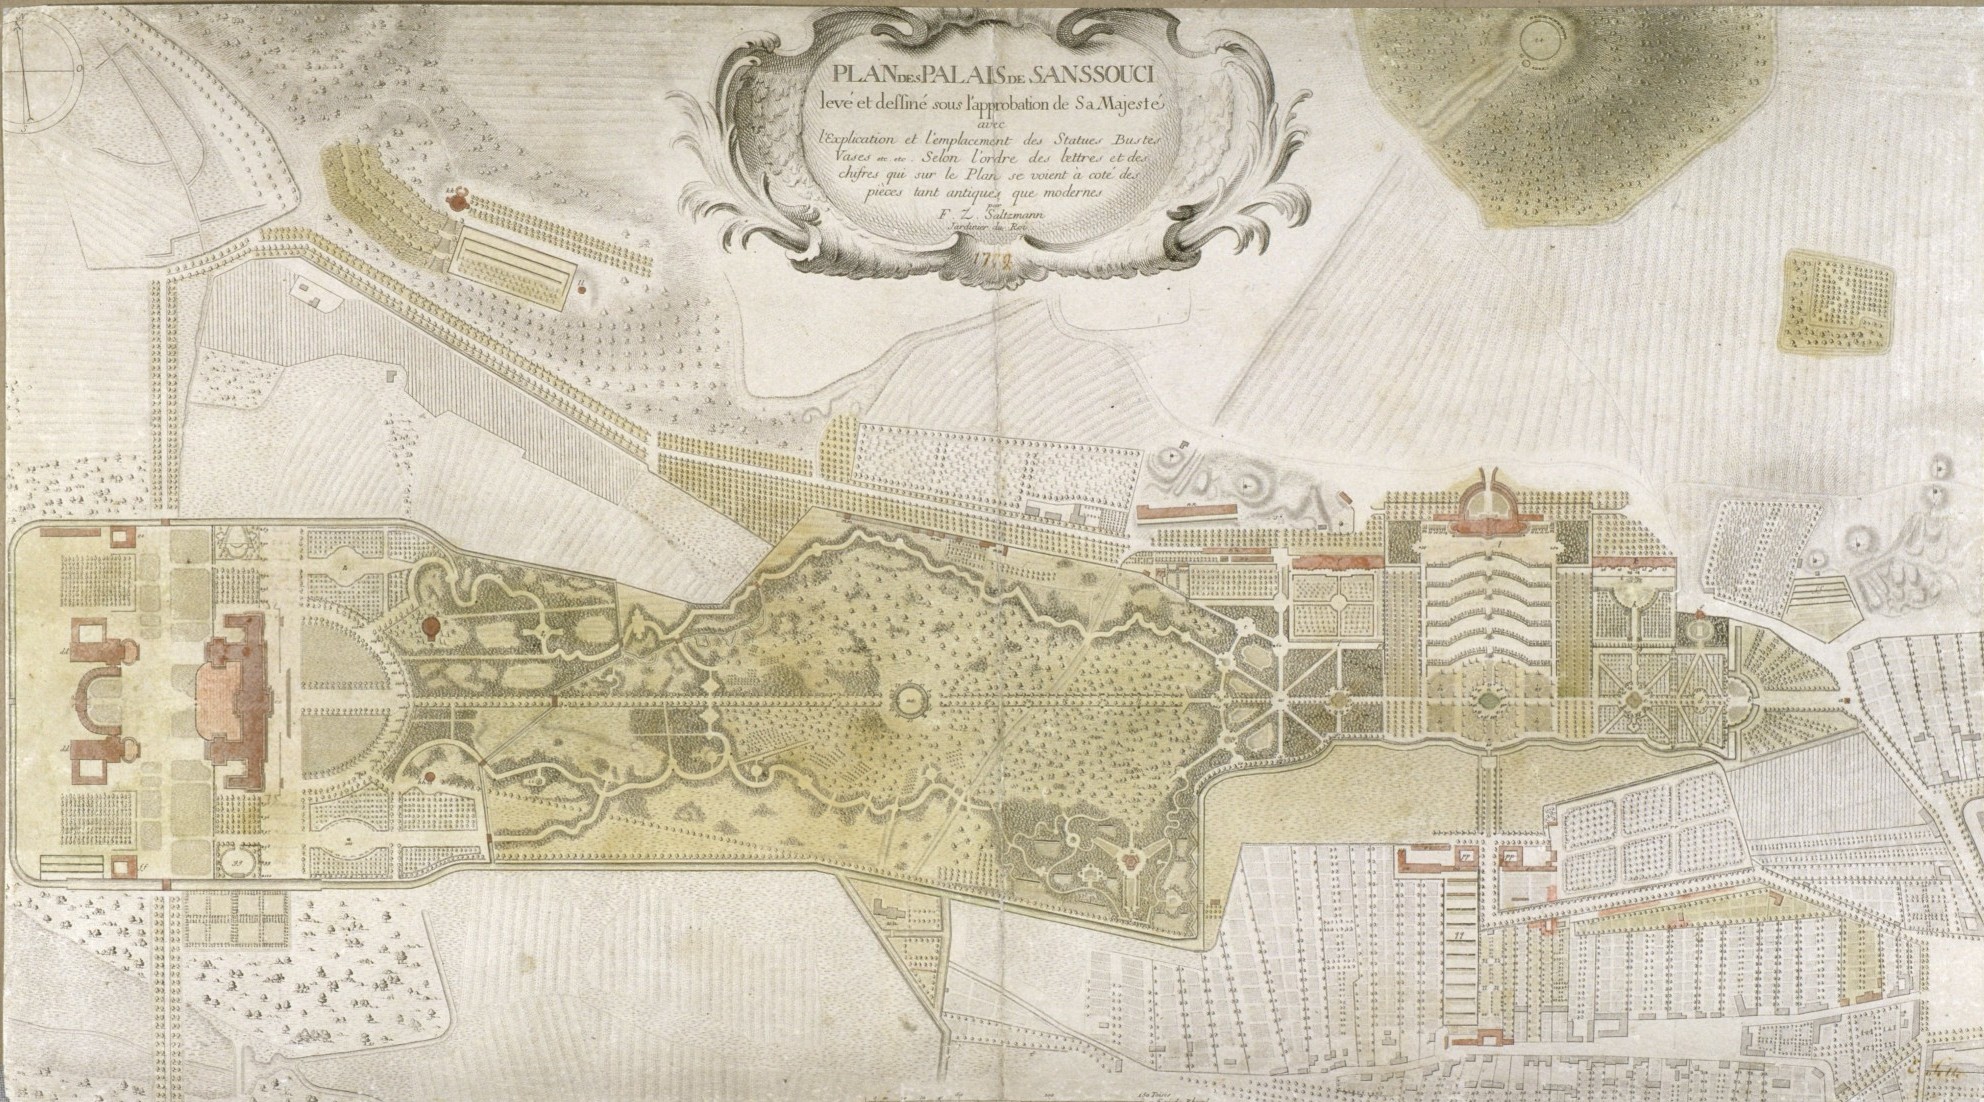 Plan des Parks von Sanssouci um 1772